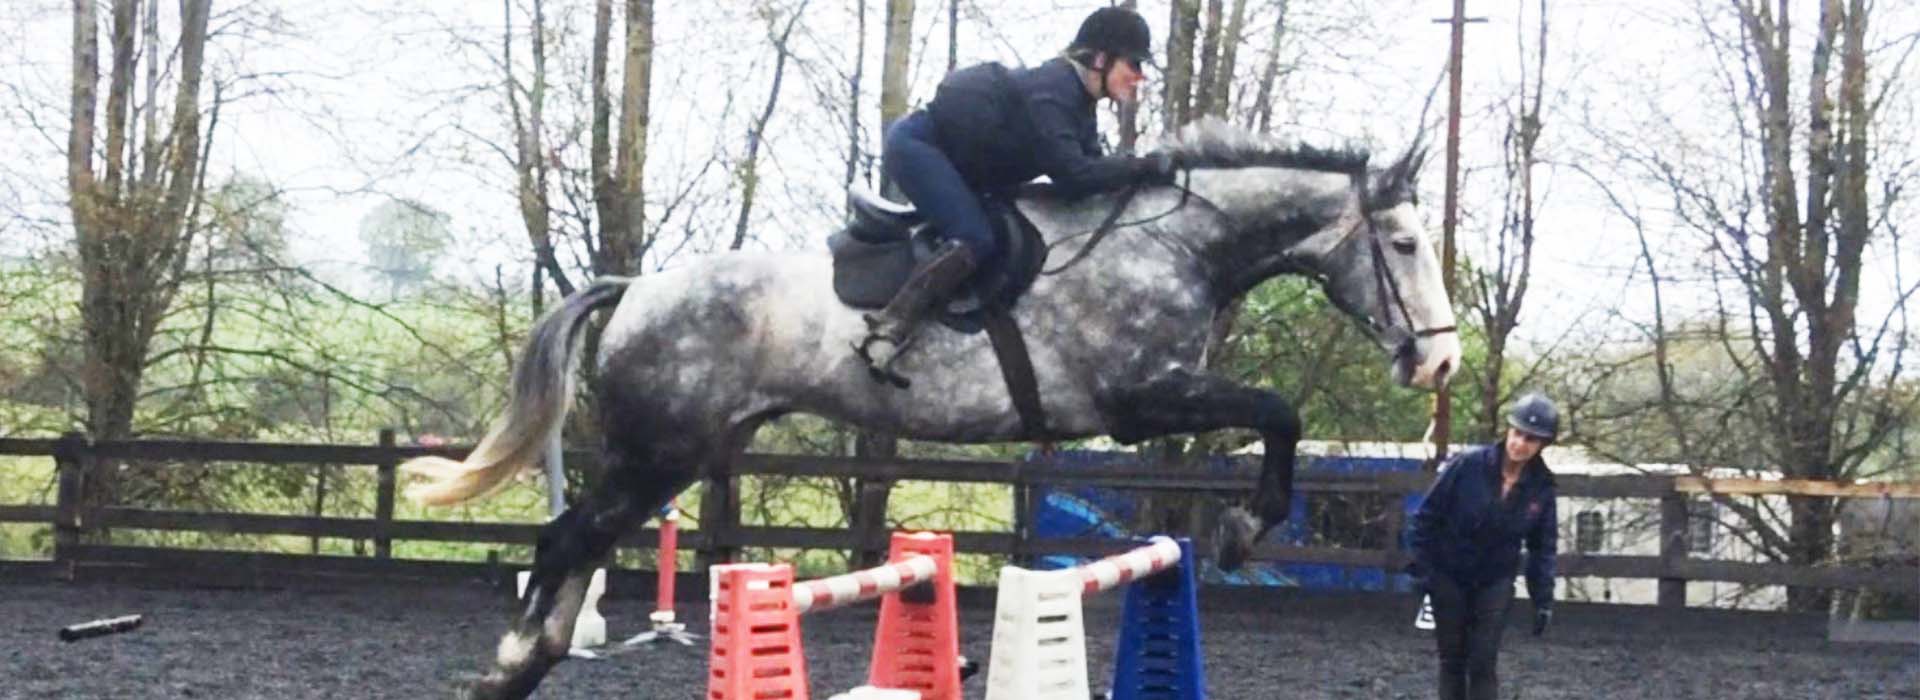 A horse jump training with Fiona Stuart at Tullochan training yard near Glasgow